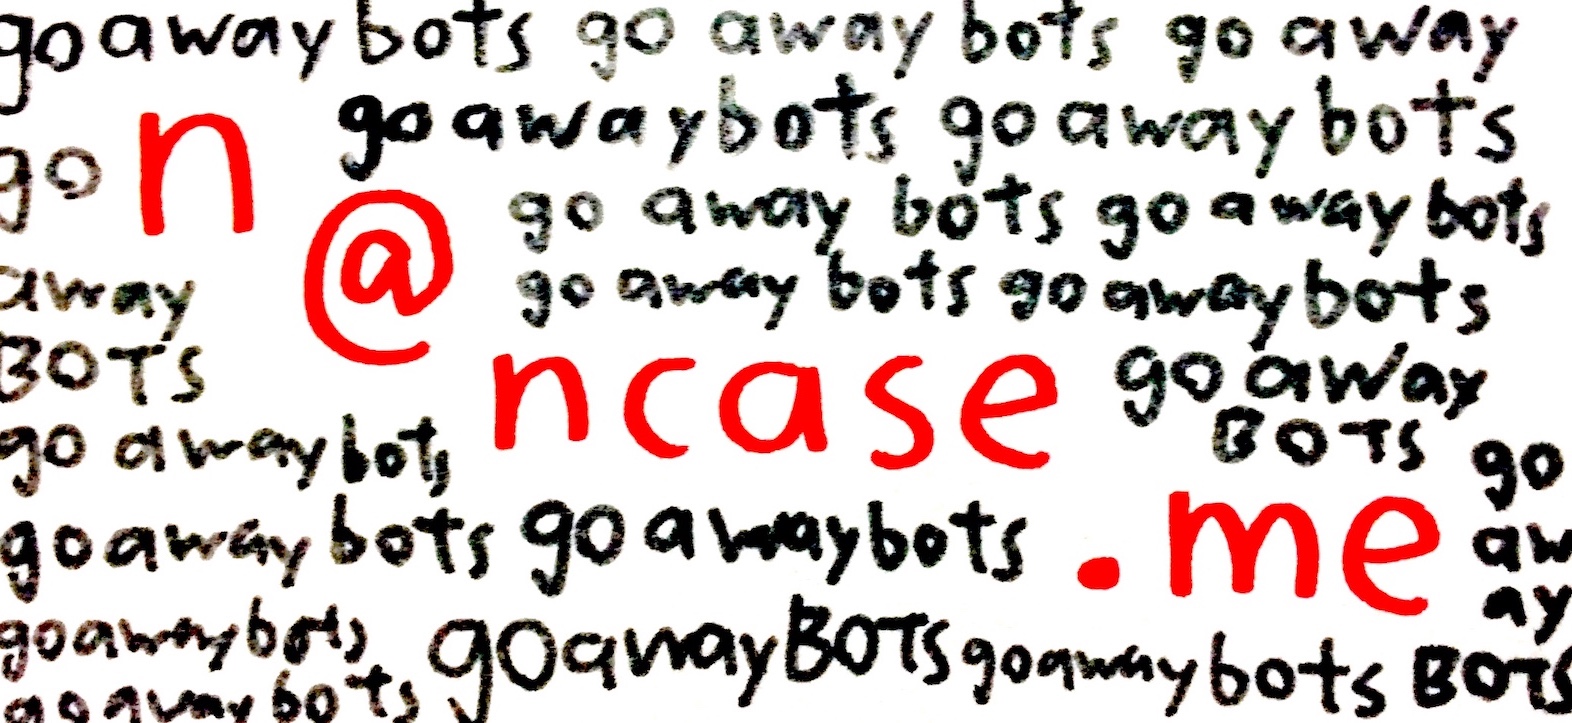 no accessible alt text, coz bots. sorry :(